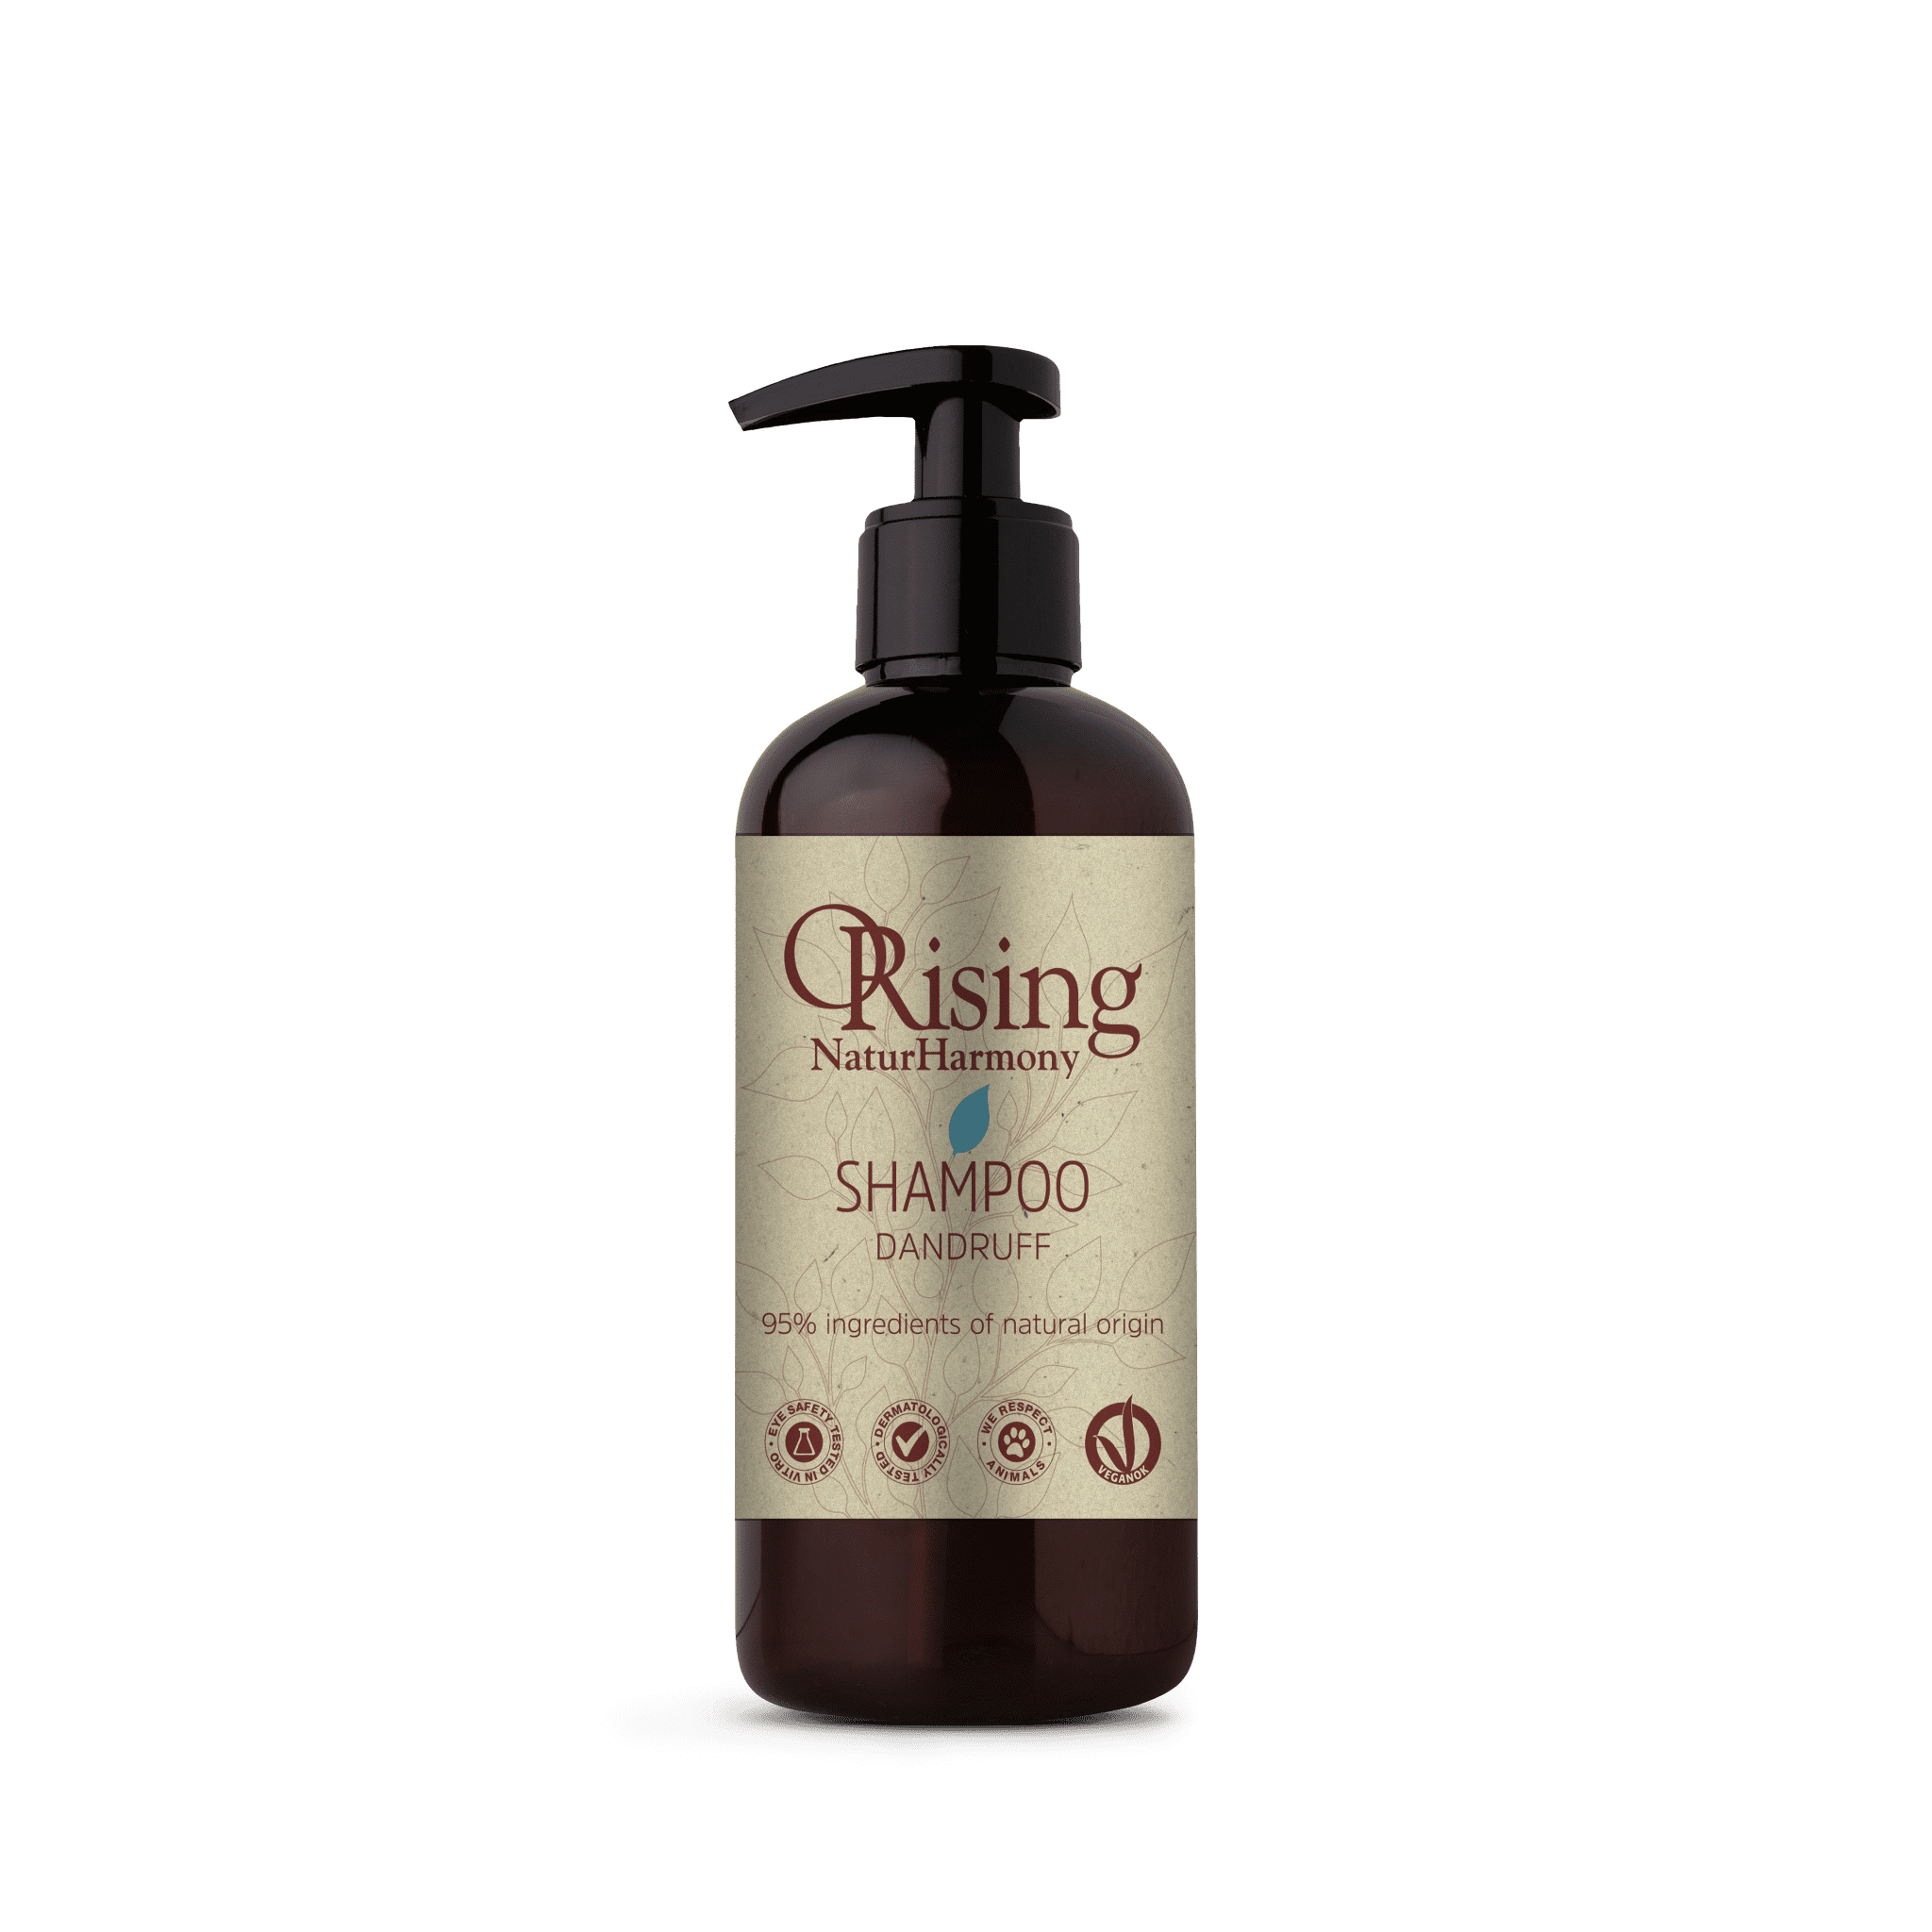 orising dandruff naturharmony szampon